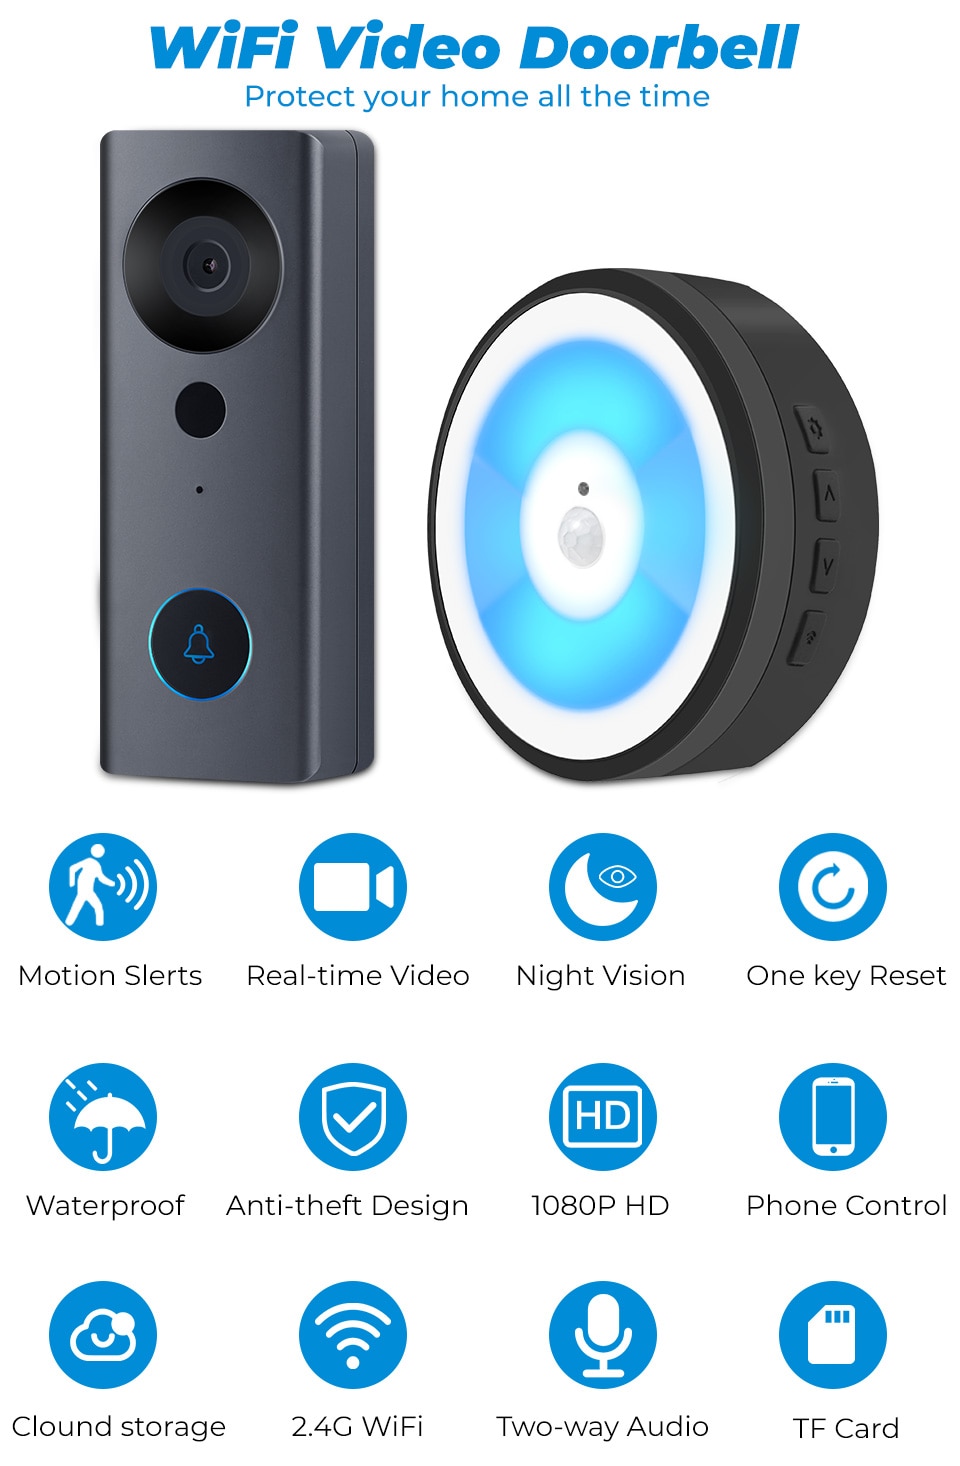 SMATRUL Tuya 1080P HD Video Doorbell Camera WiFi Wireless Smart Home Door Bell Outdoor Intercom 2 Way Audio LED Night Light USB